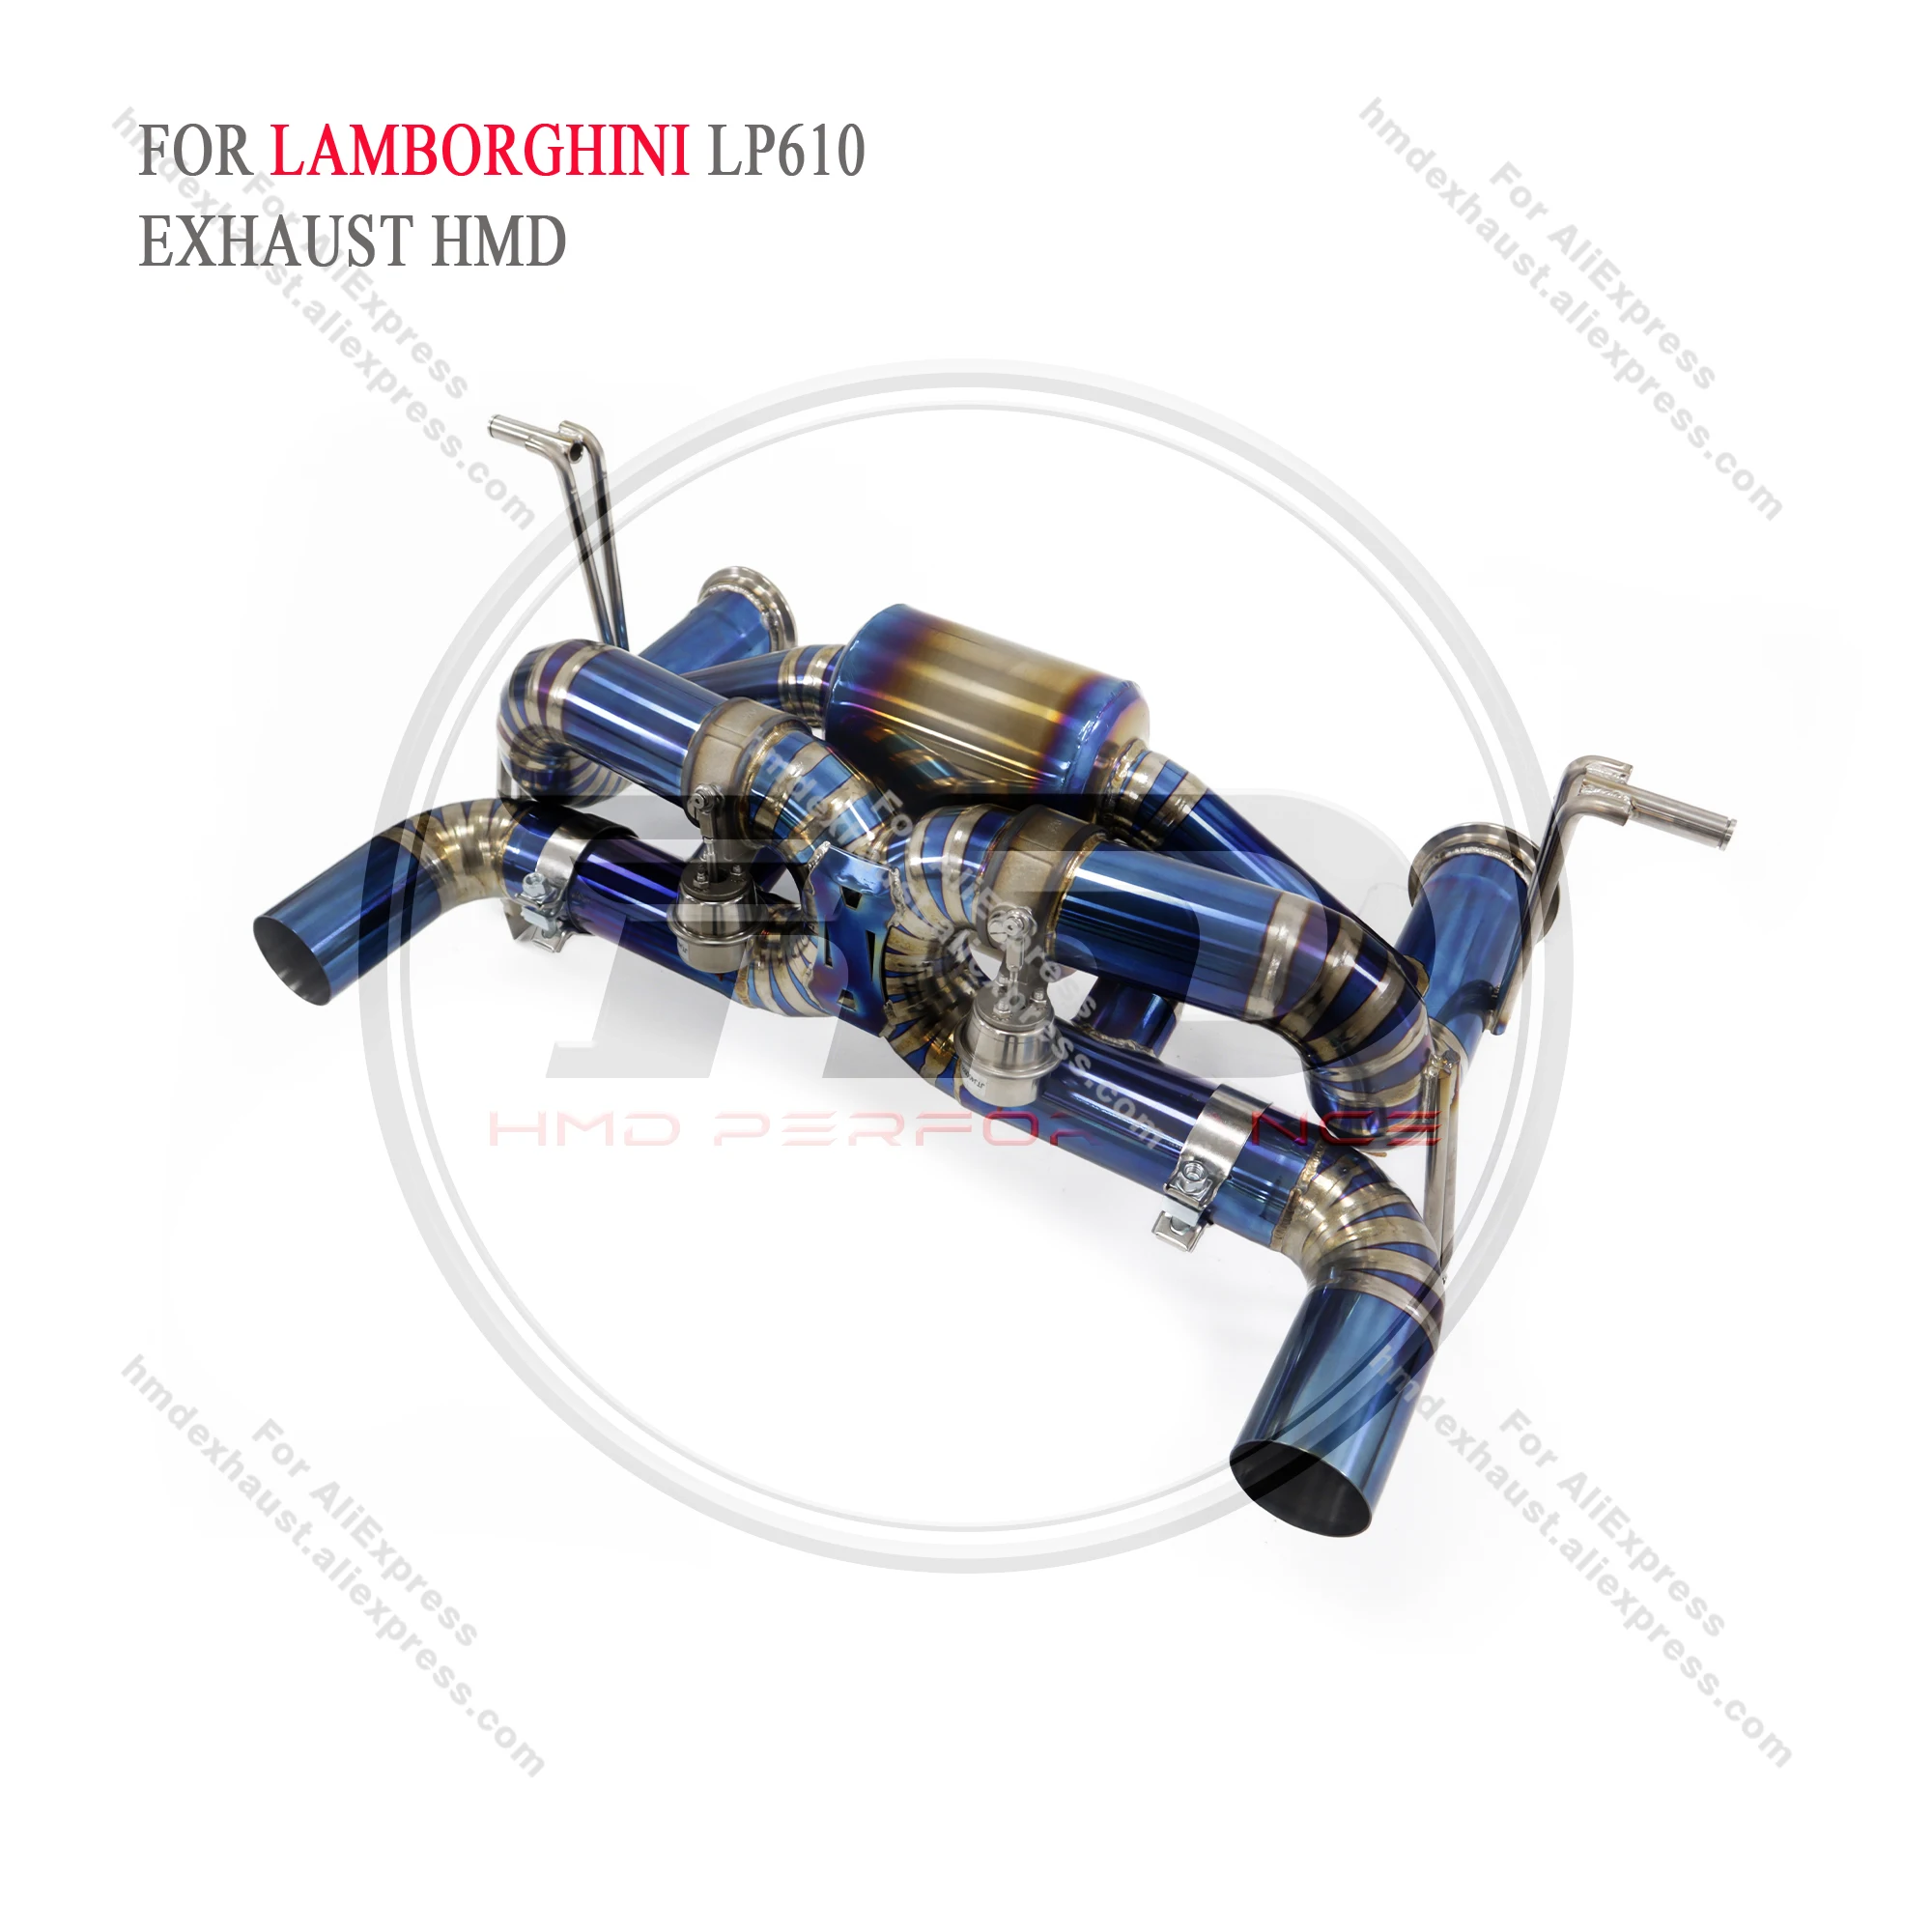 

HMD titanium alloy exhaust system For Lamborghini LP610 exhaust upgrade EVO catback valve silencer